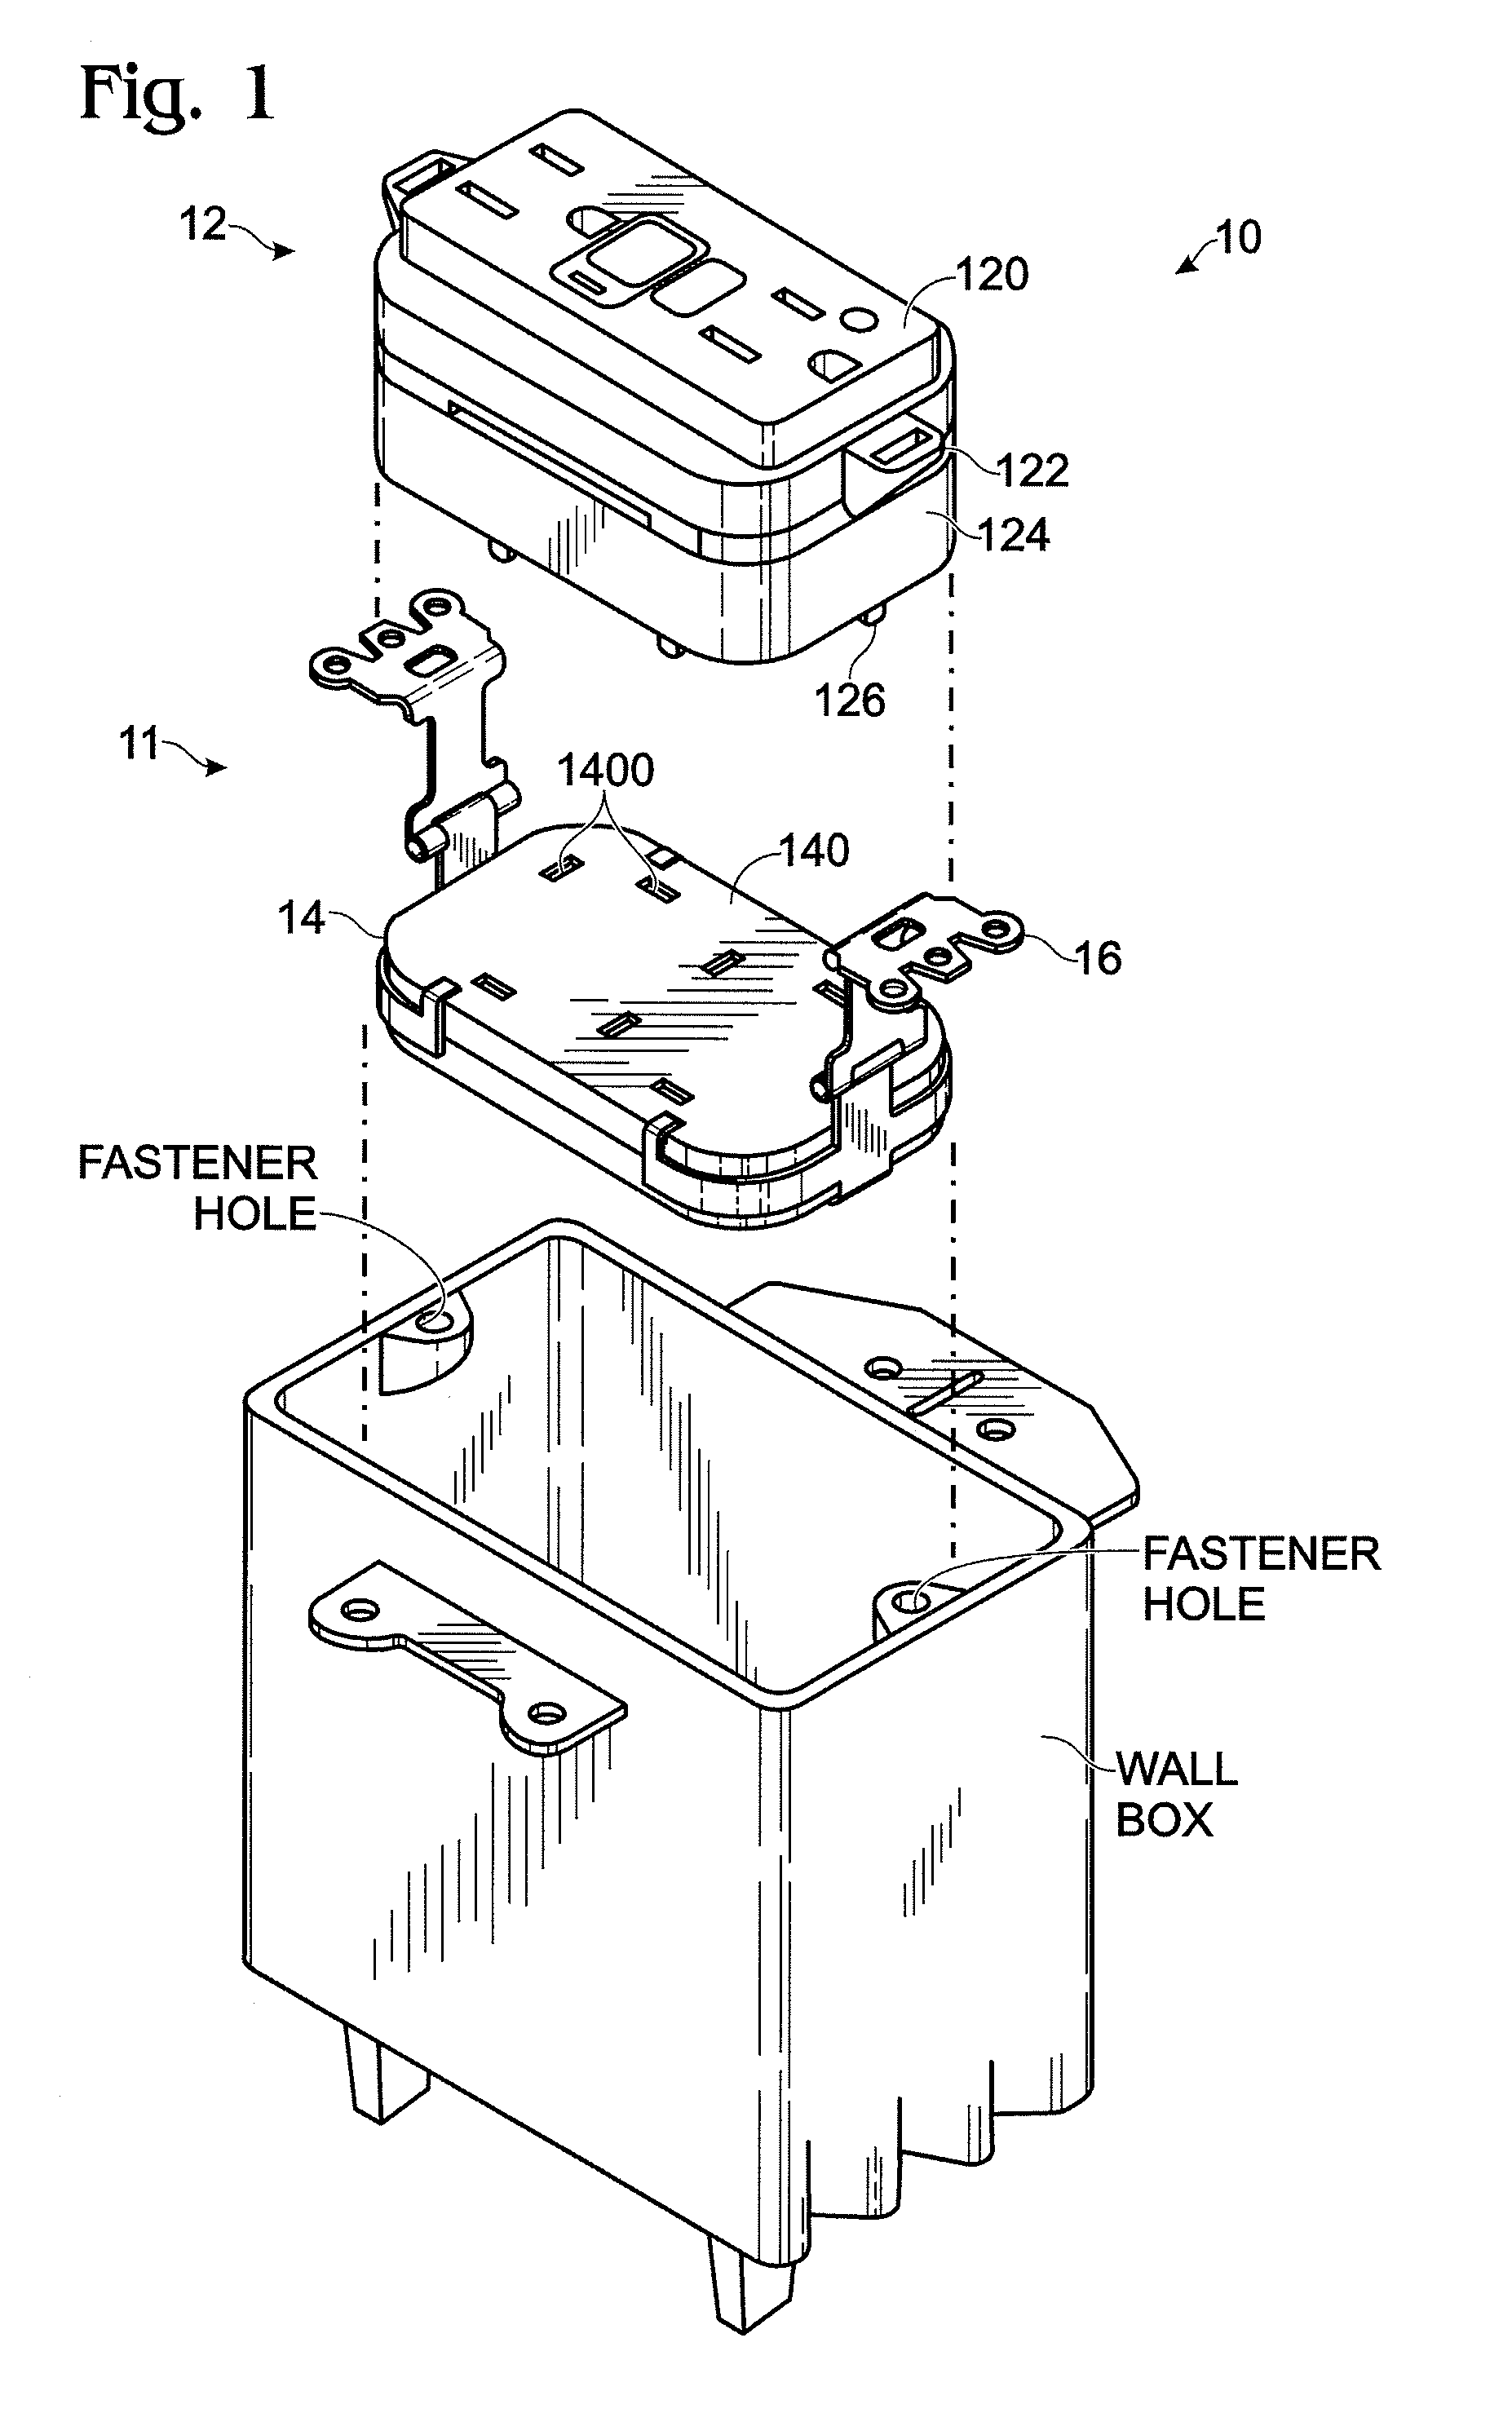 Wall box receptacle with modular plug-in device